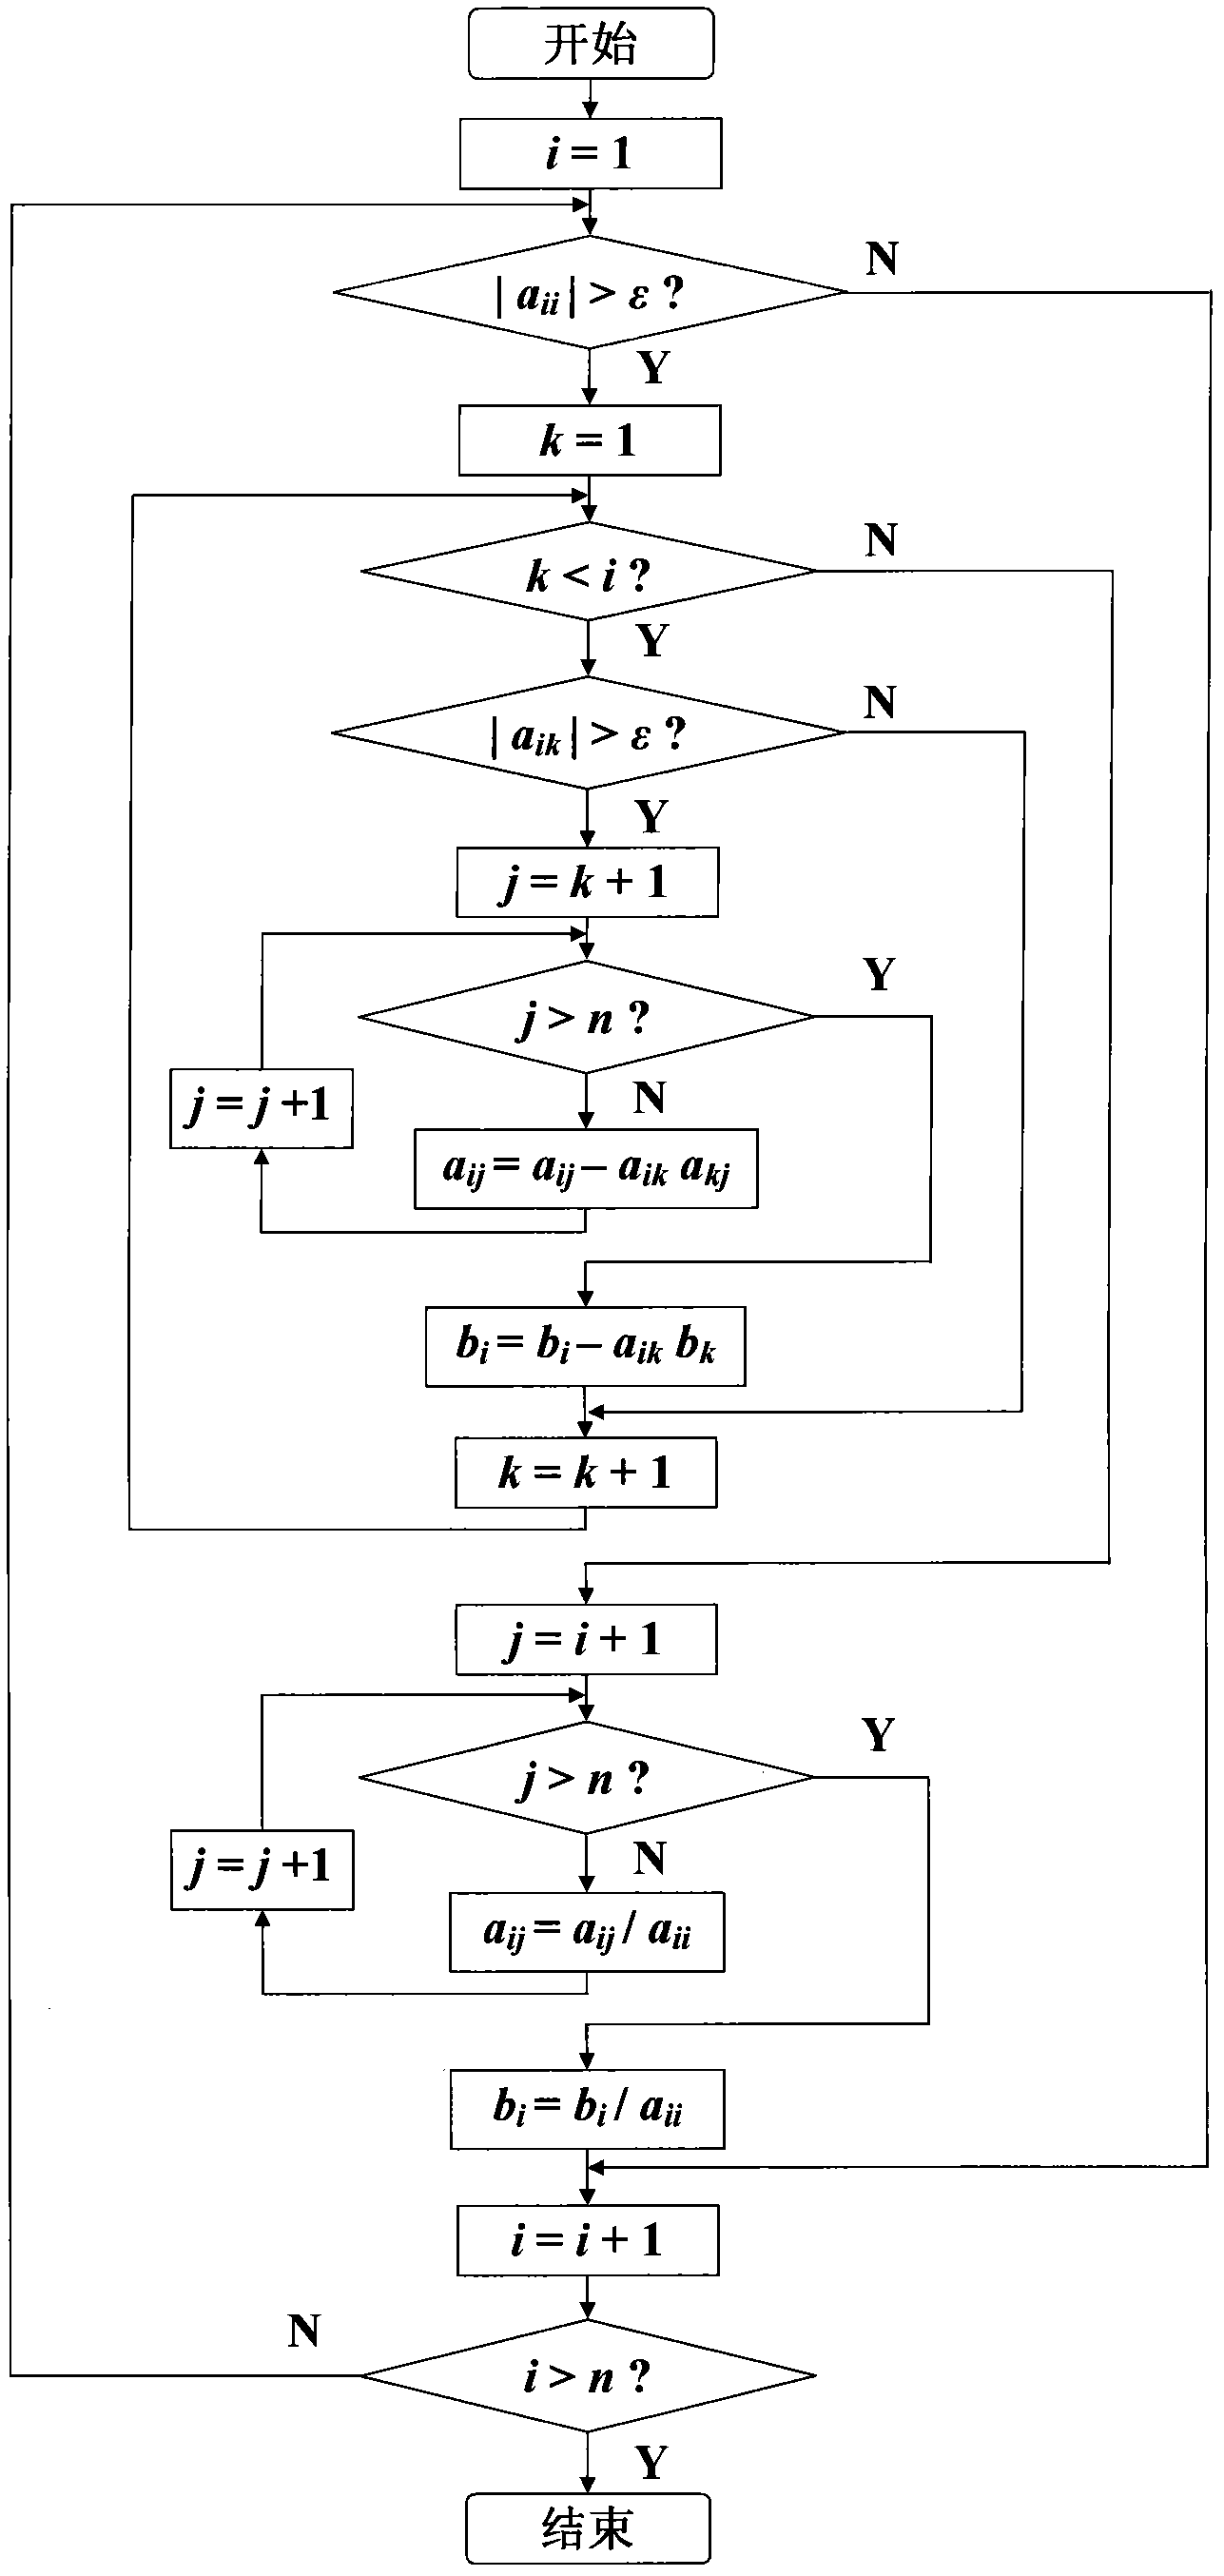 Newton-process power flow calculation method for study purpose